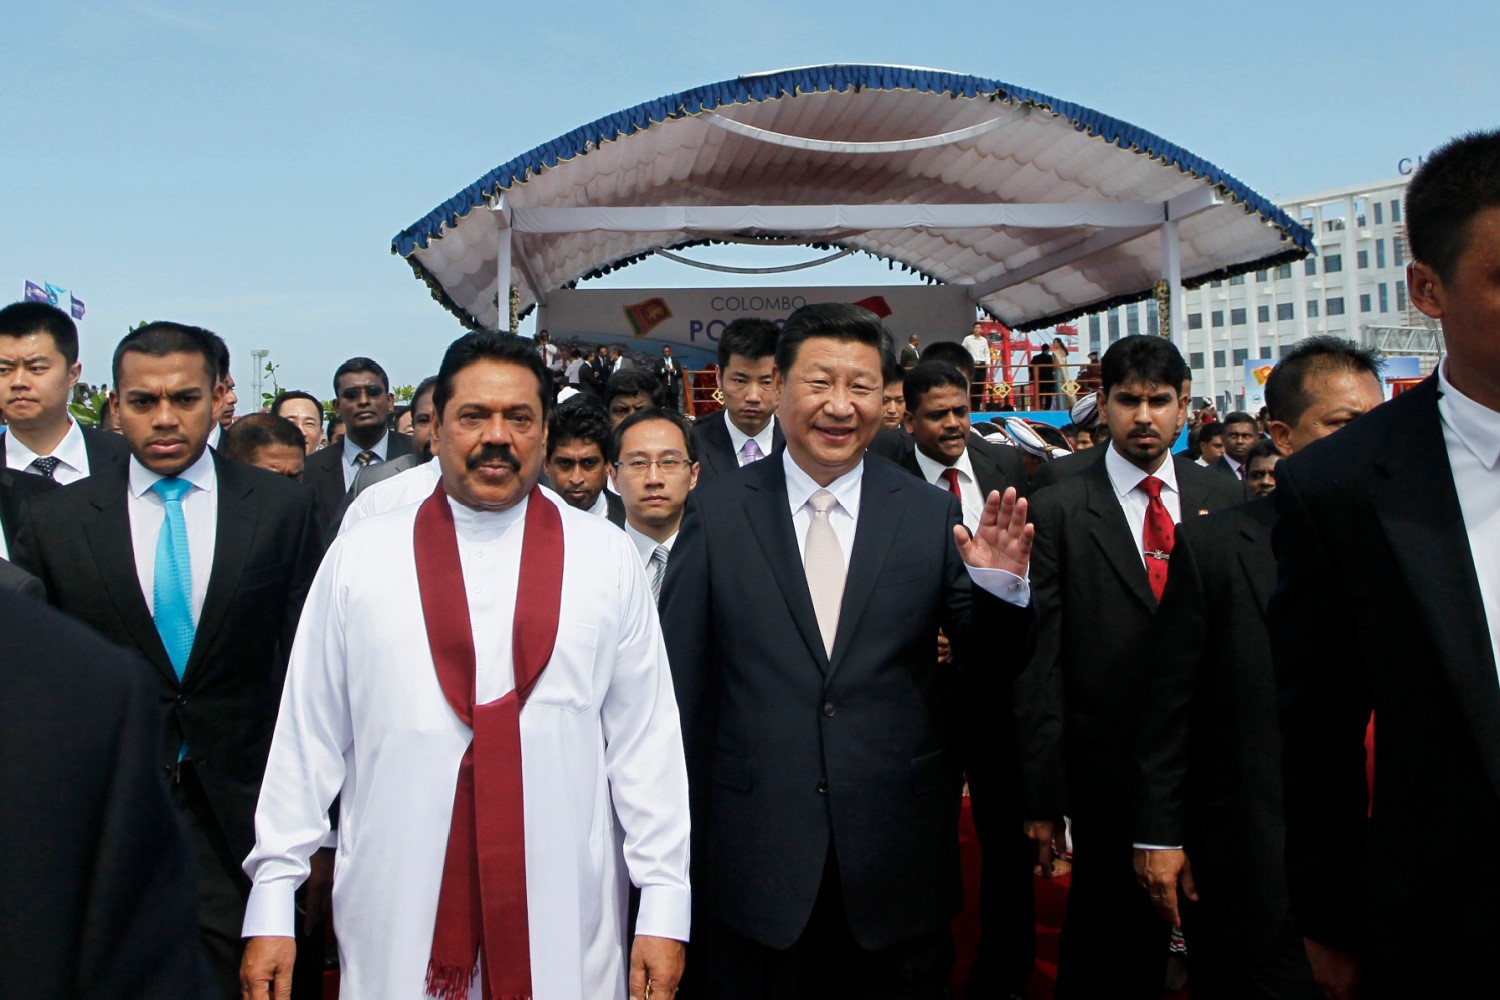 huge crisis srilanka asks china to restructure the debt